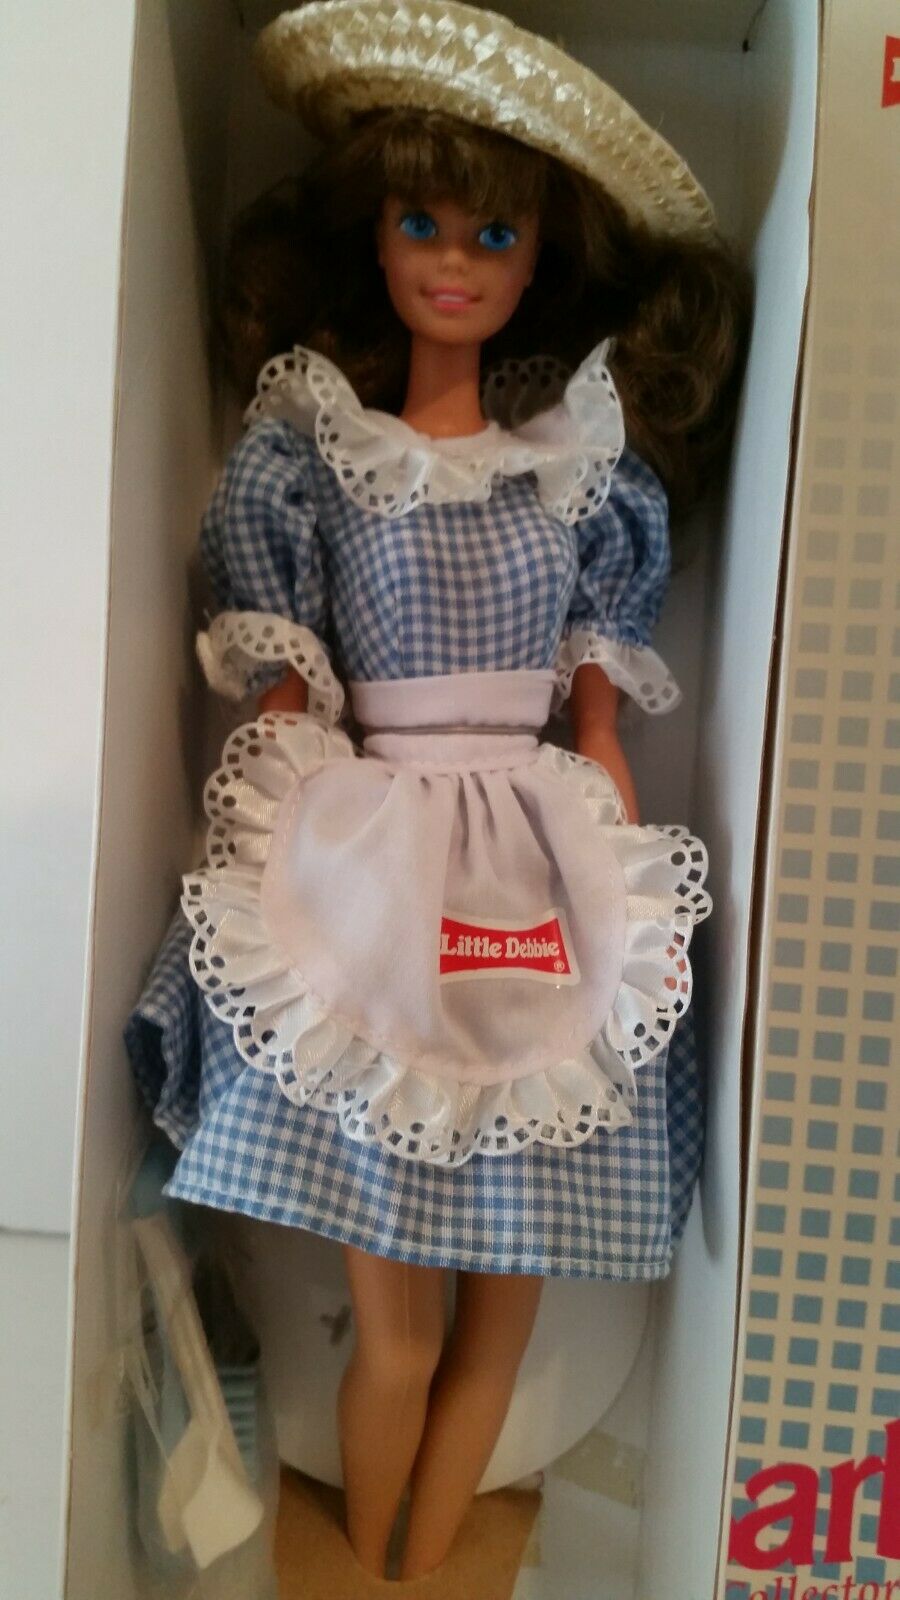 Little Debbie Barbie Collector's Edition. 1992 Mattel Corp.